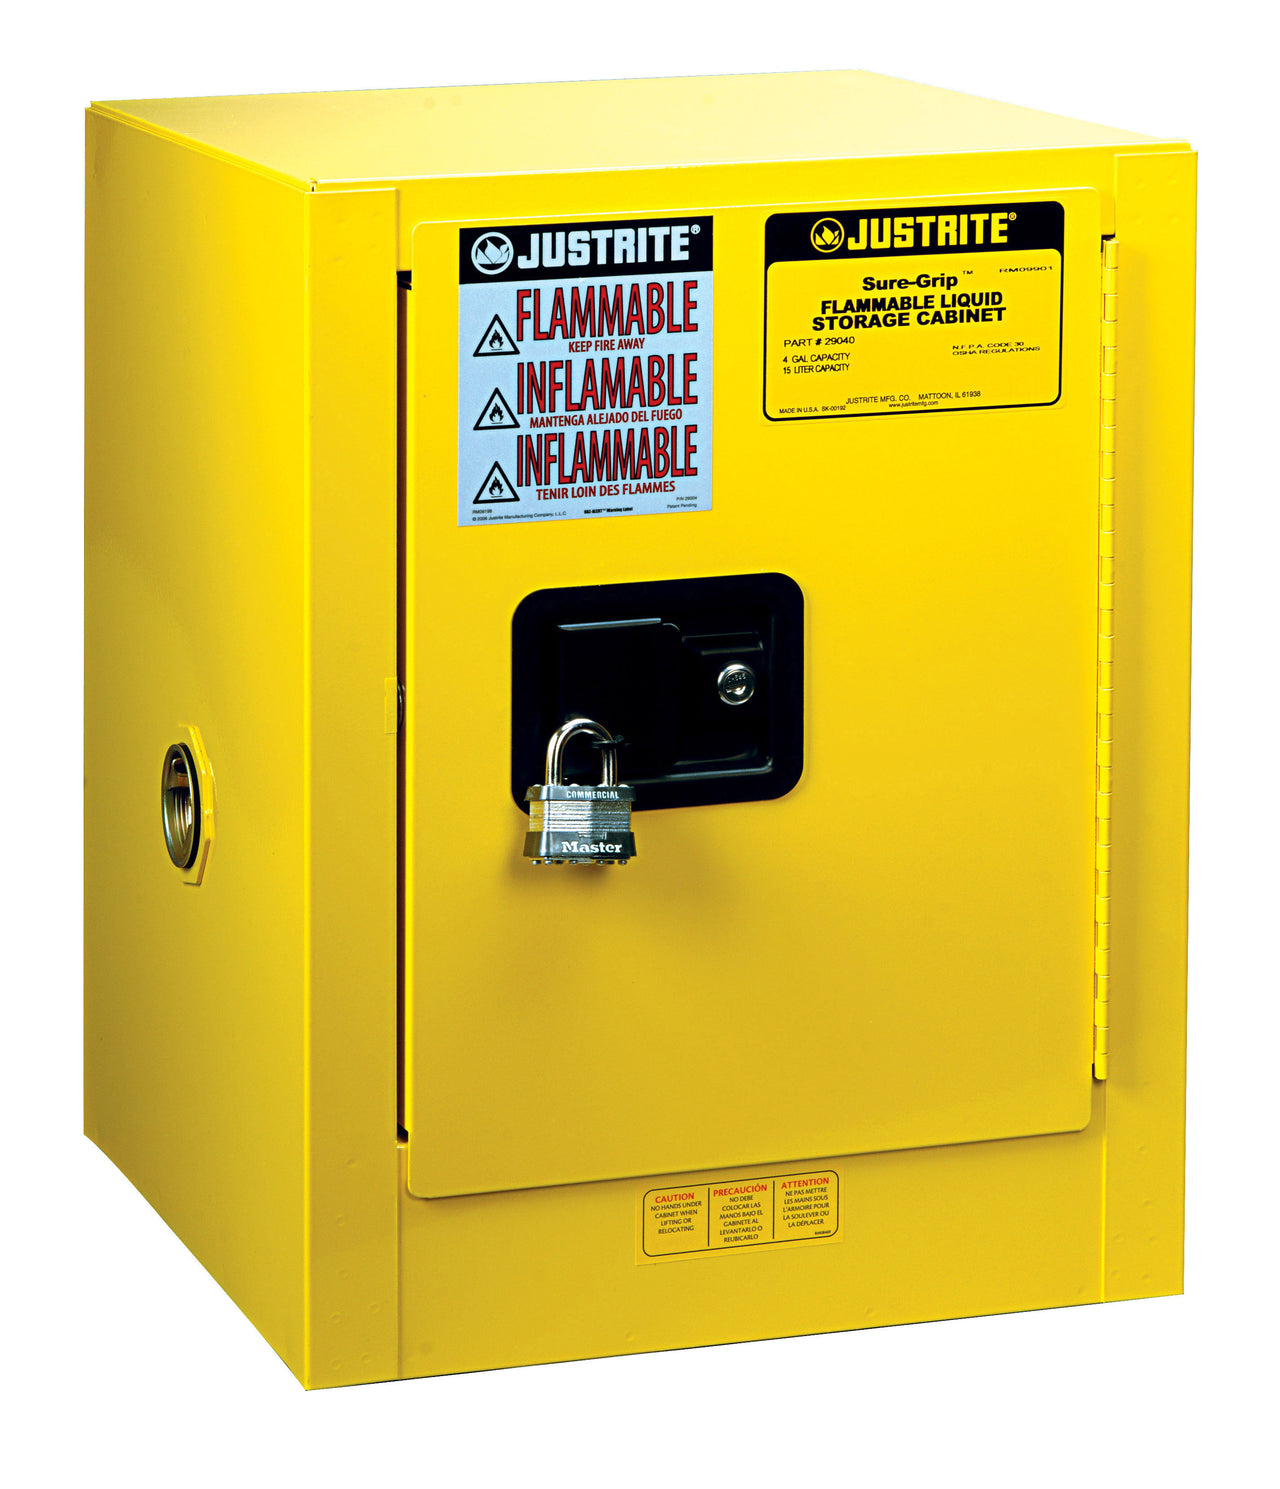 Justrite EX 4-Gallon Self-Closing Safety Storage Cabinet